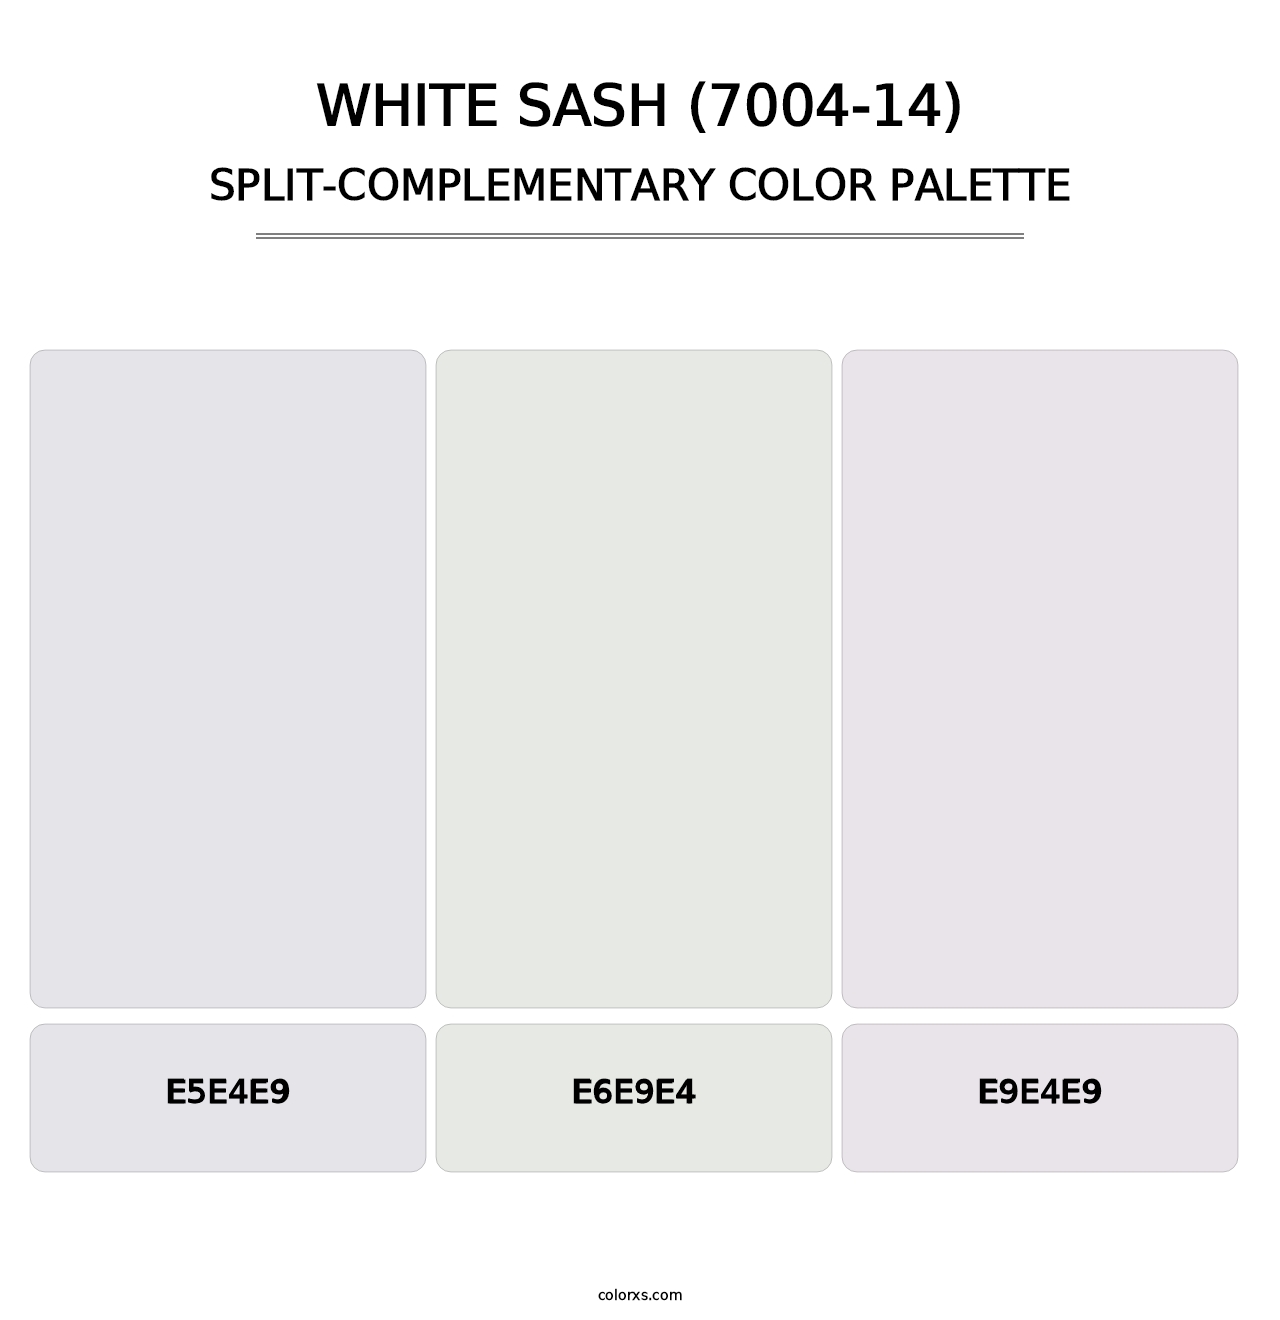 White Sash (7004-14) - Split-Complementary Color Palette